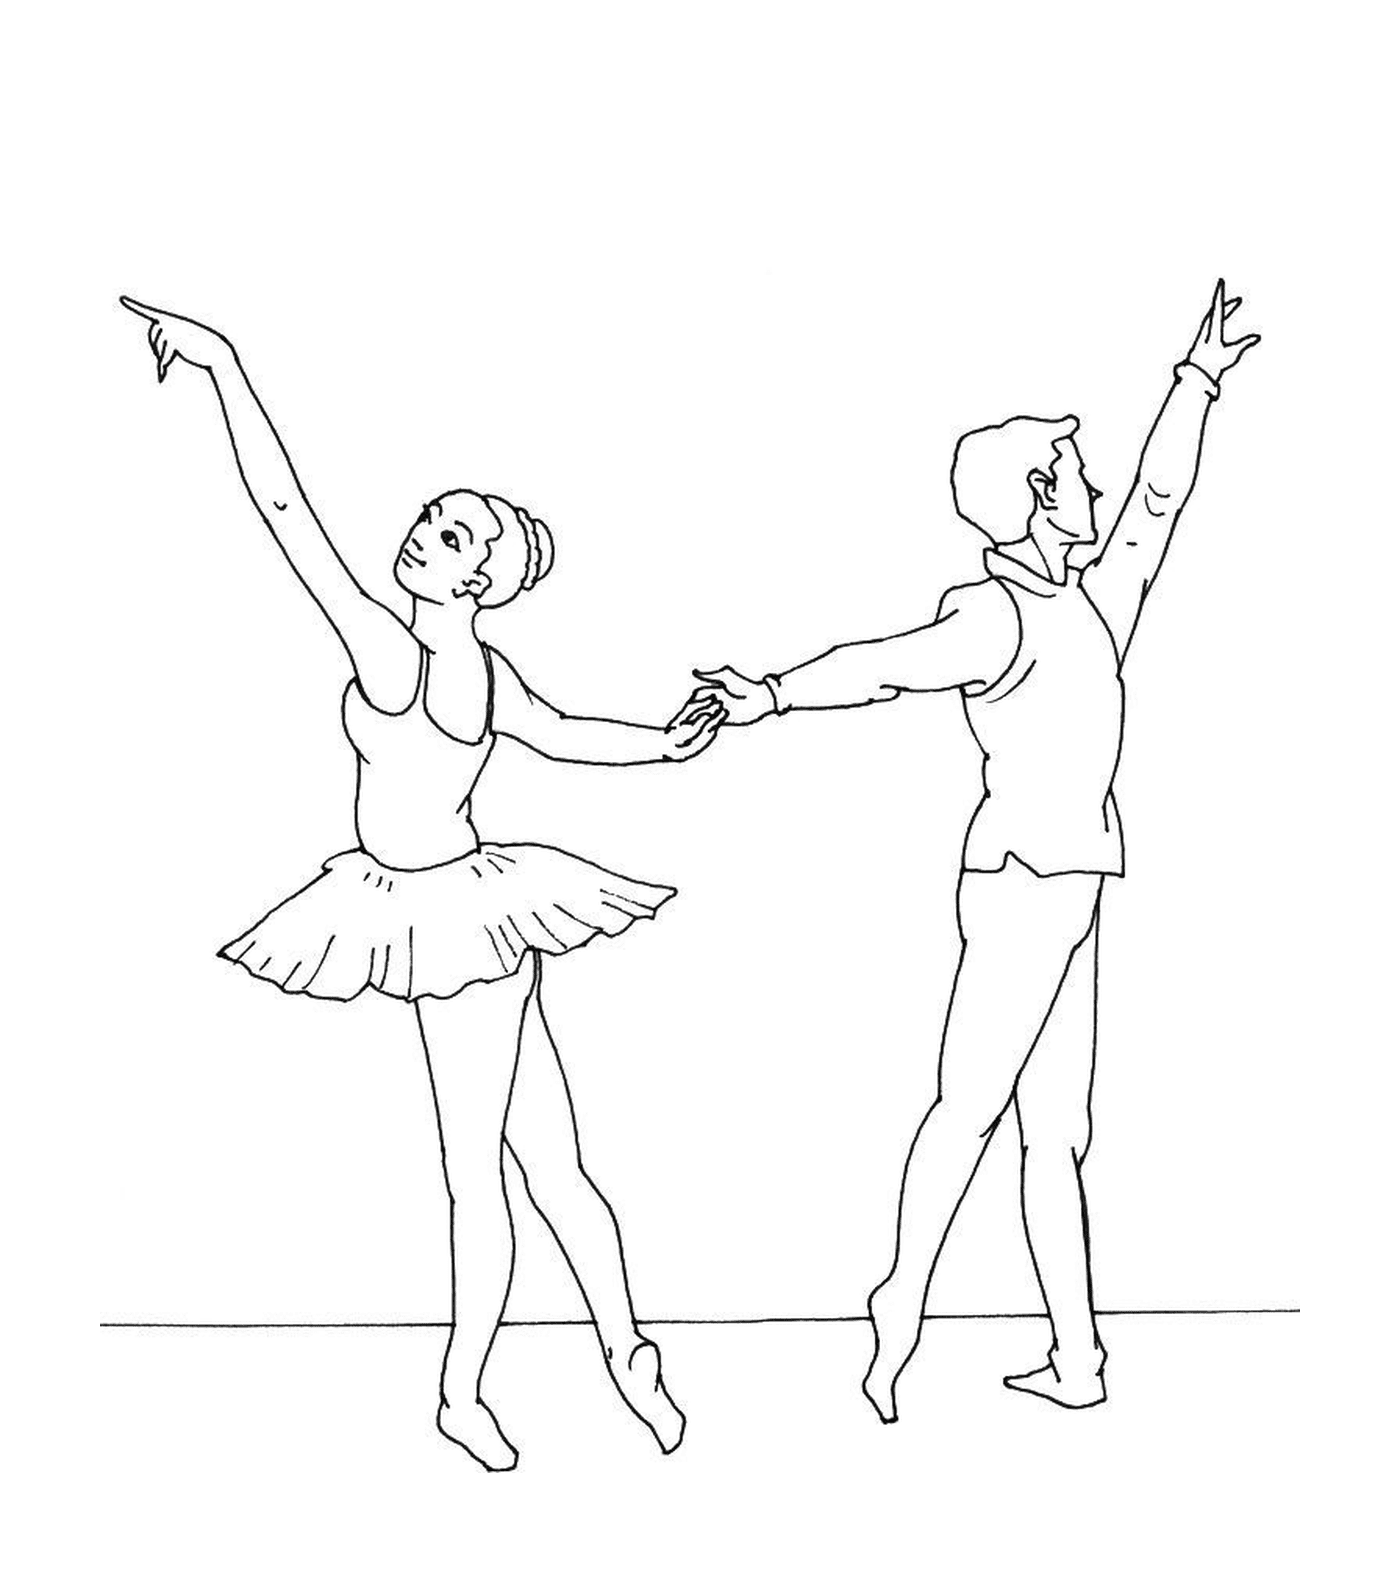  Dancer and Dancer Holding Hand 